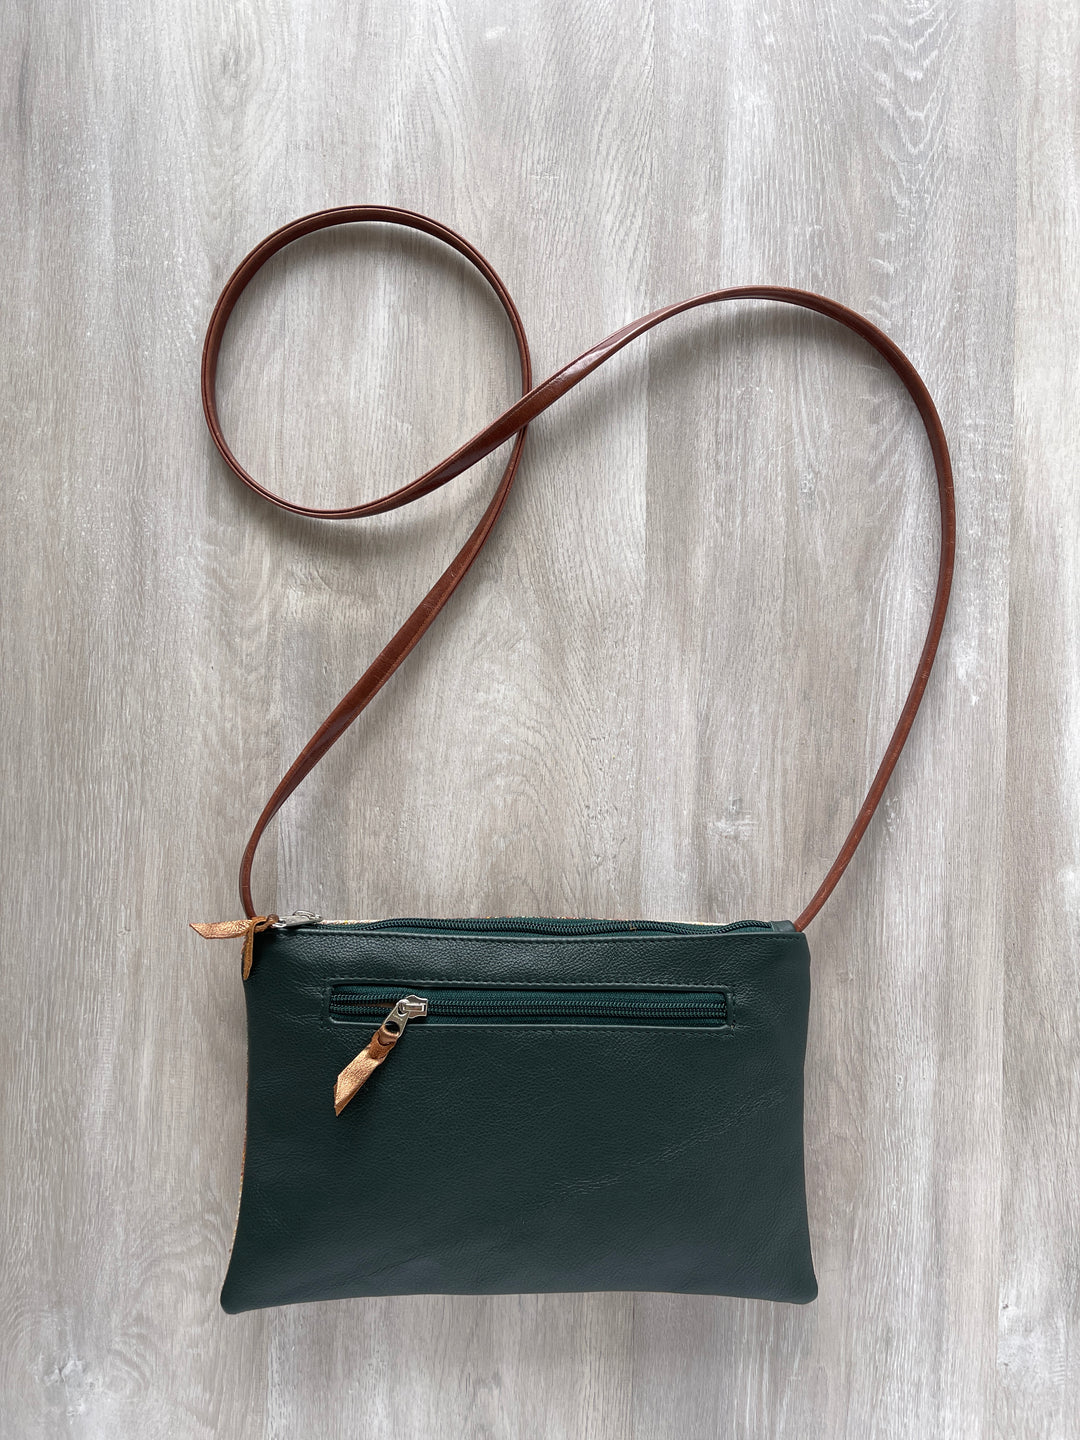 What Length Should My Crossbody Strap Be? – Bolsa Nova Handbags